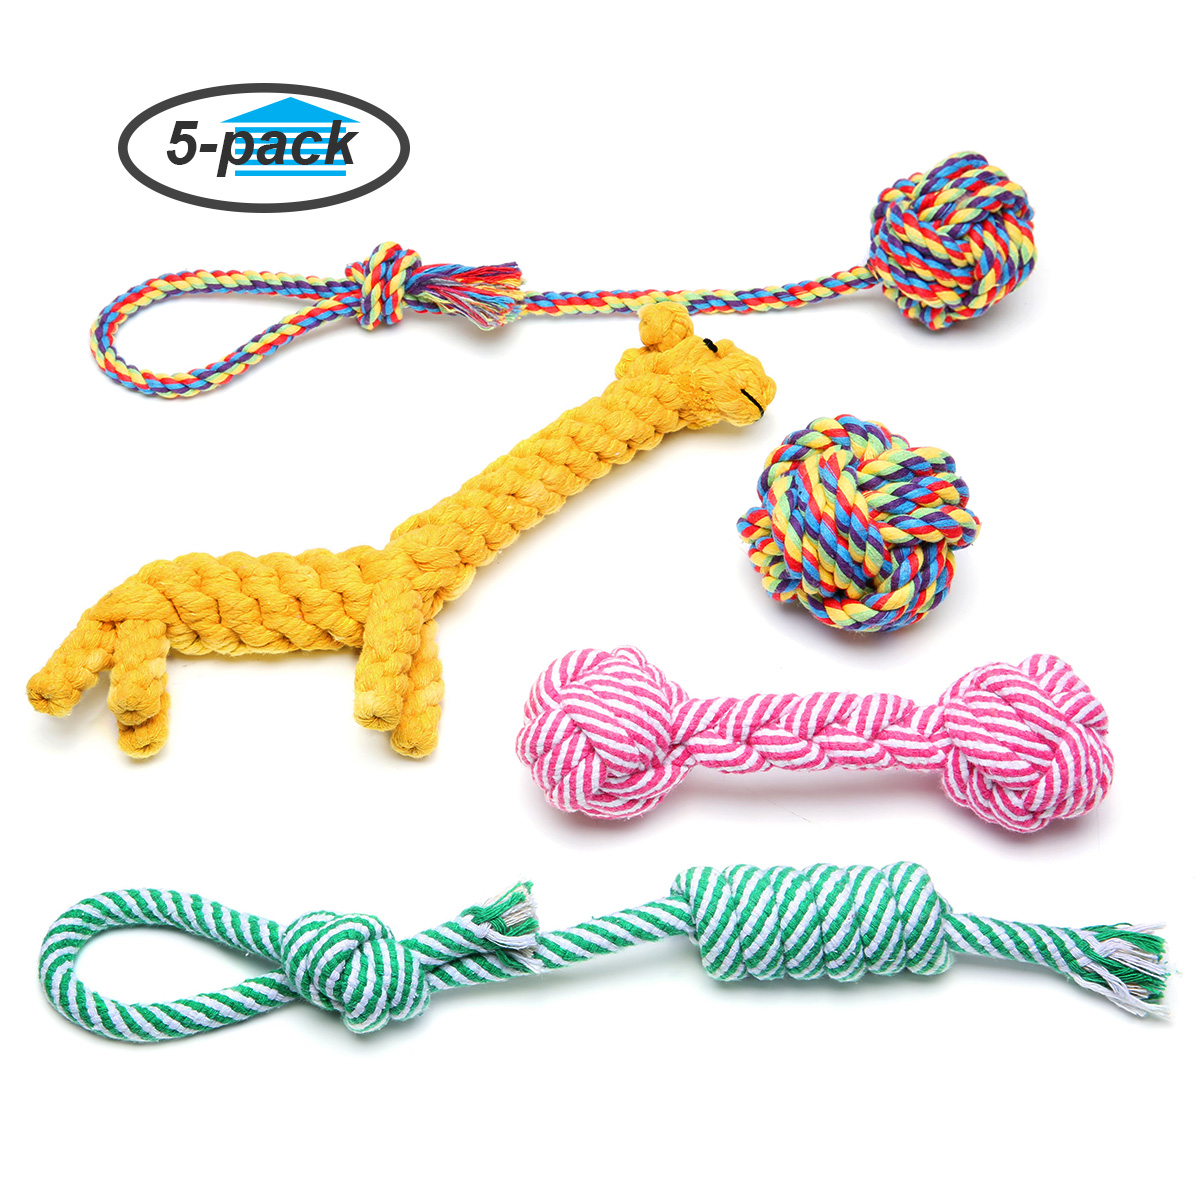 Braided-Cotton-Rope-Bone-Pet-Dog-Interactive-Toys-Dogs-Chews-Bite-Training-Cat-Puppy-Supplies-1304812-6